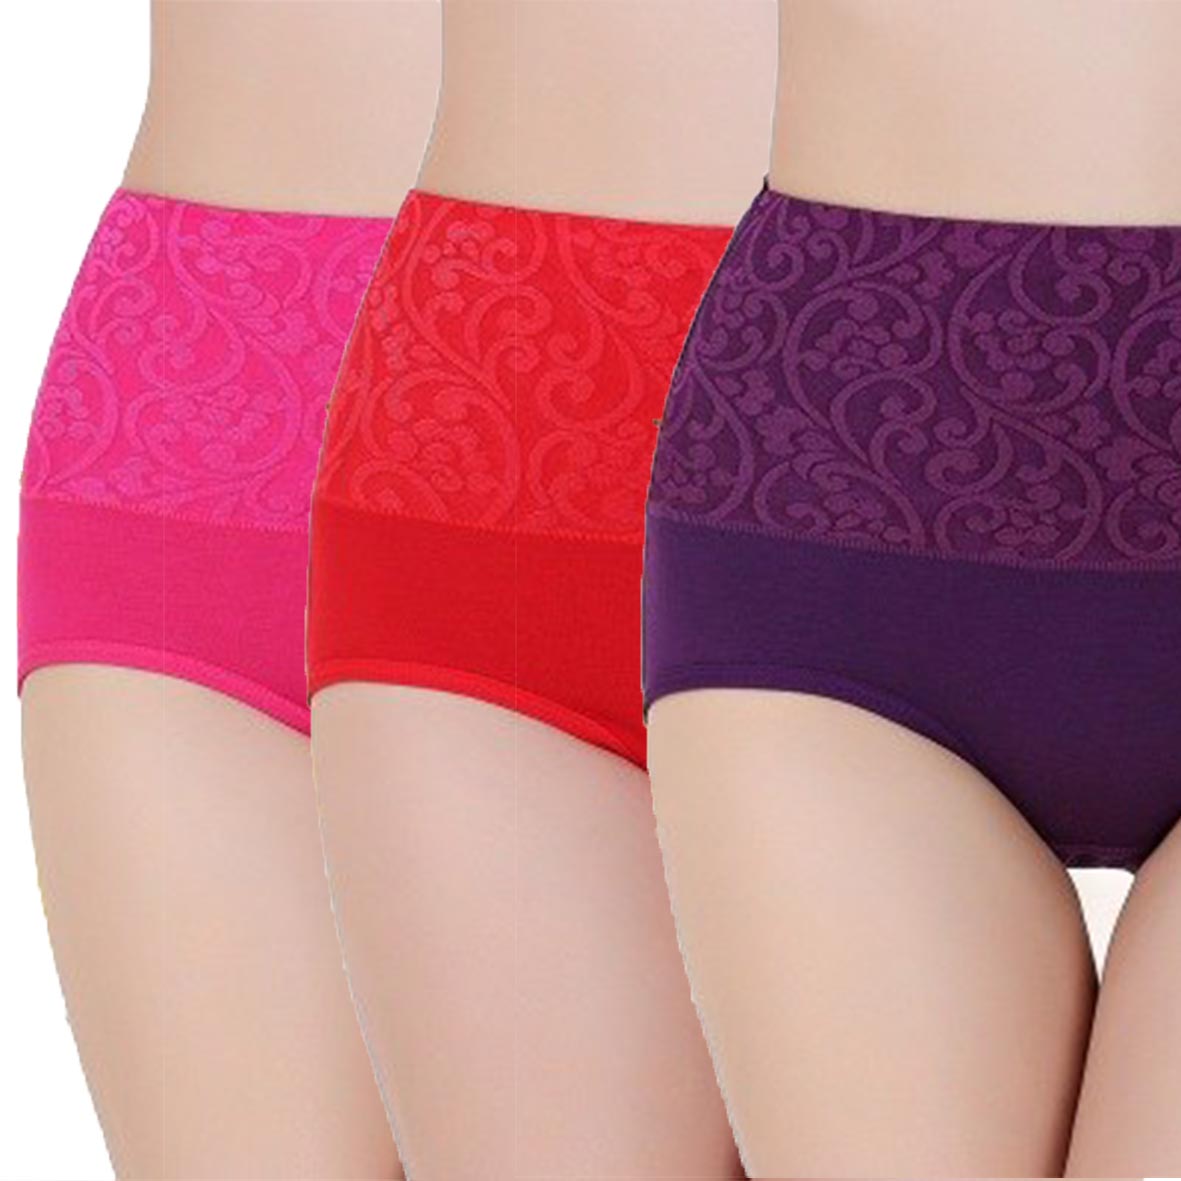 SENSITRA Sexy Women Lace Panty/Underwear – High Waist Full